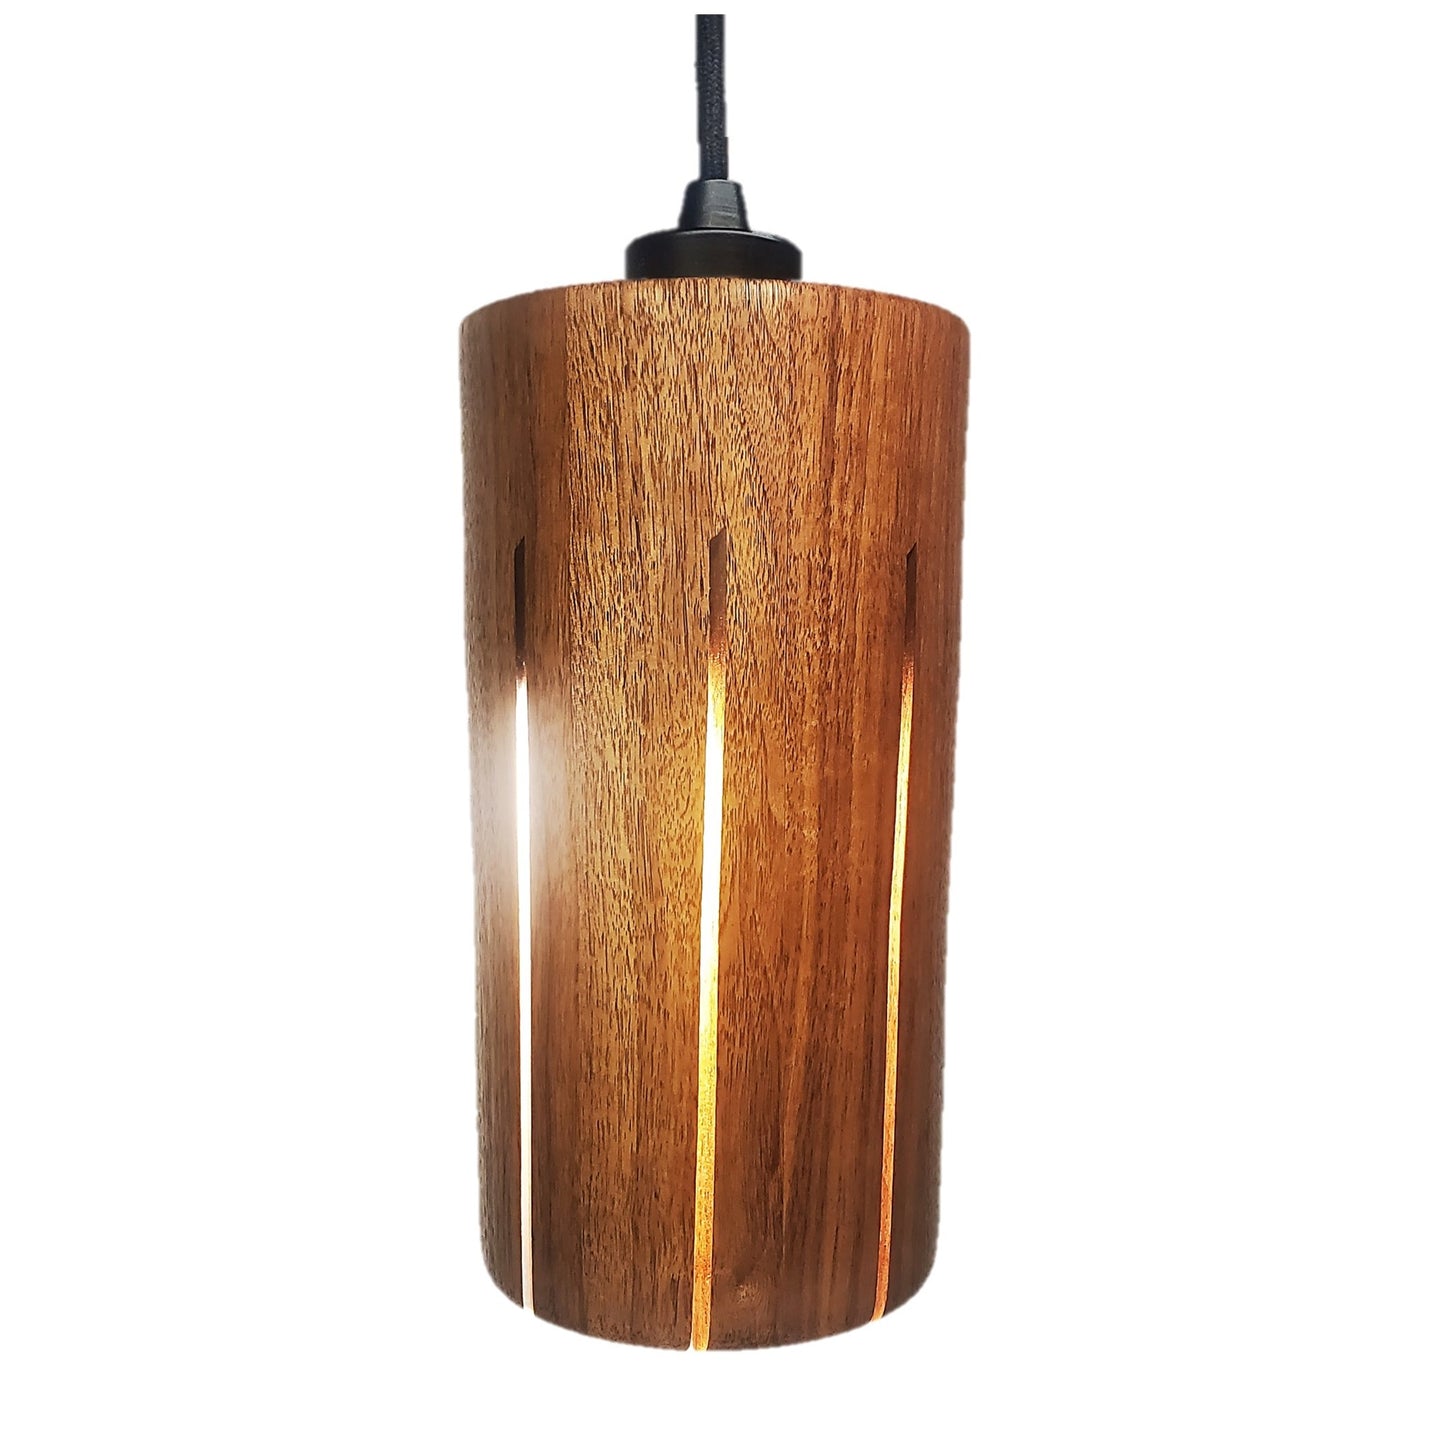 Strake Studio Latimore Pendant Lamp made from Walnut wood.